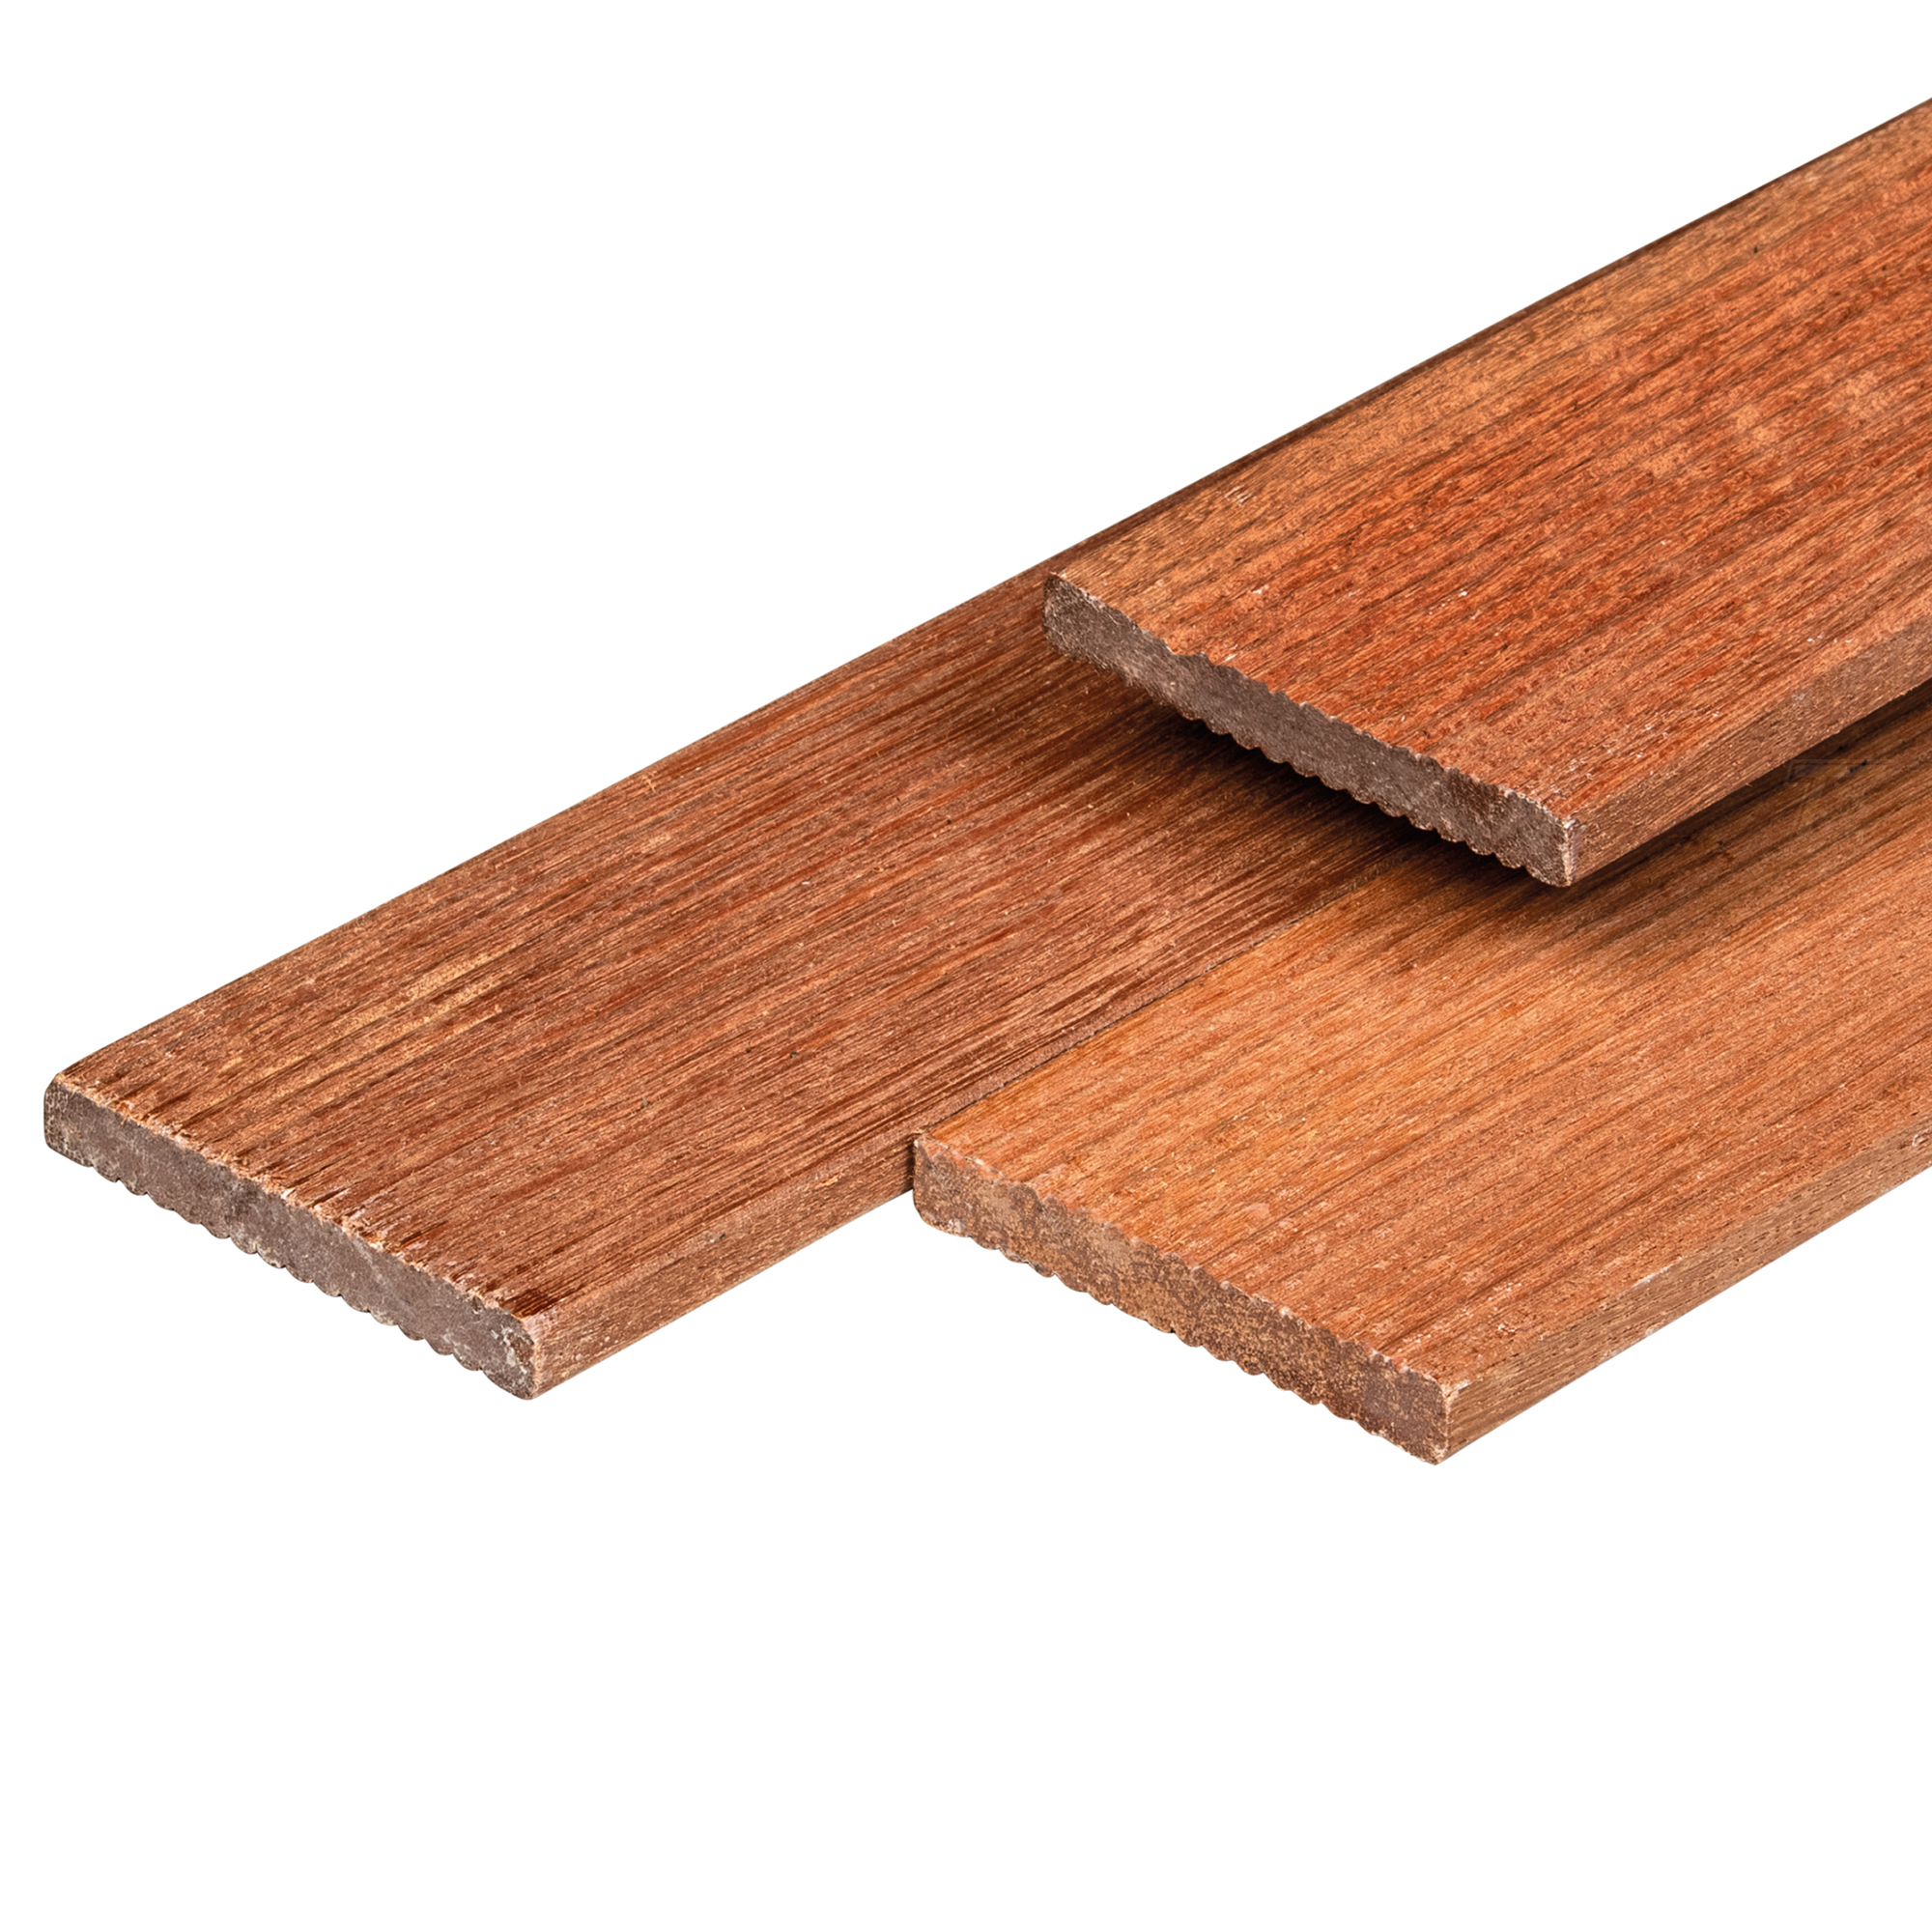 Plank hardhout 1.2x9.0x180cm